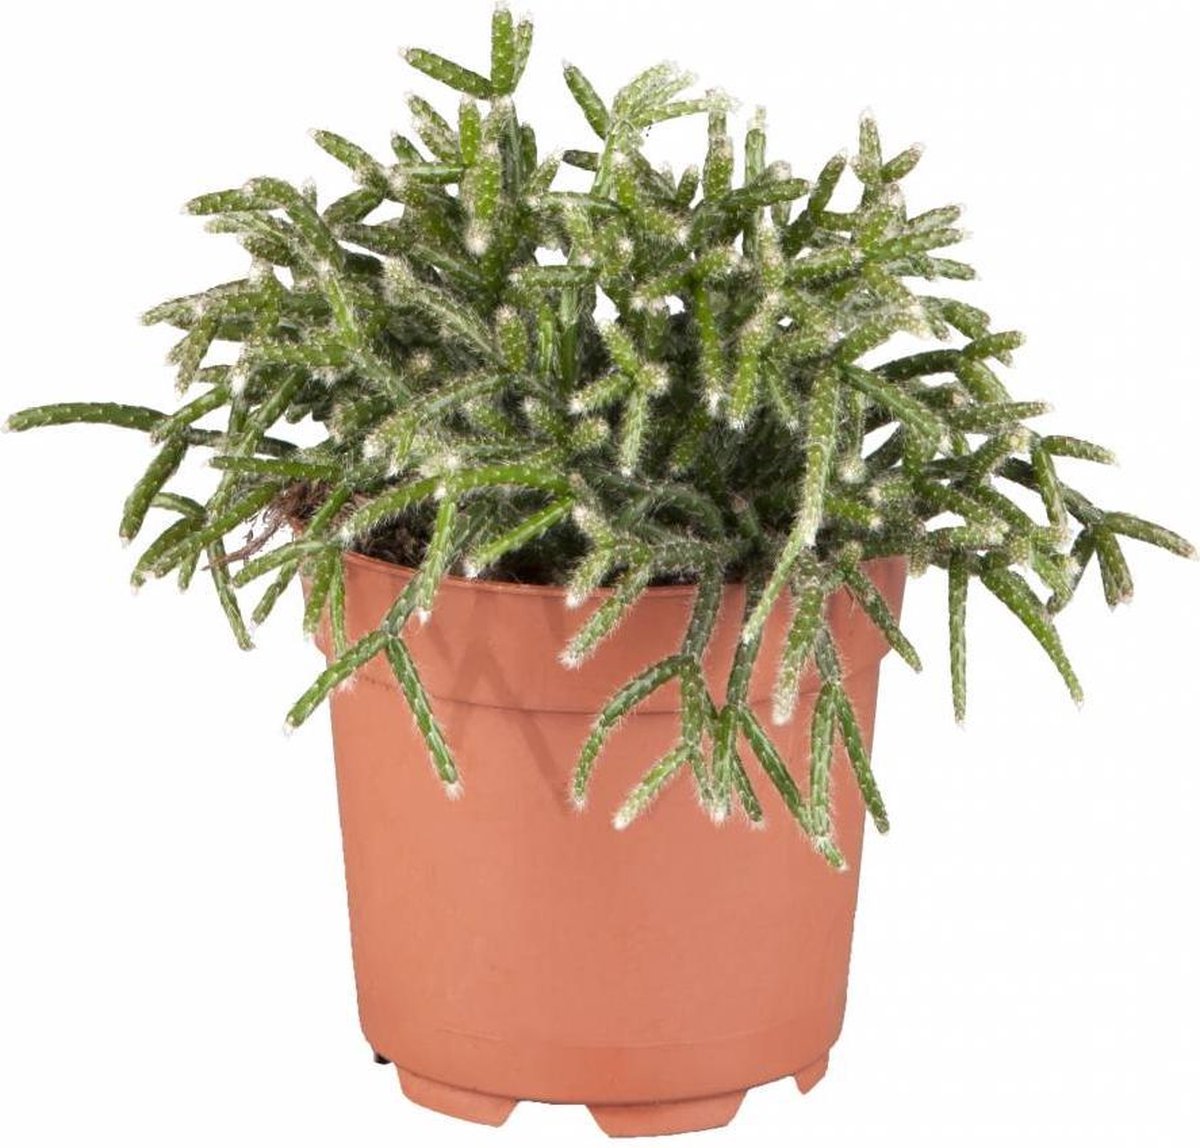 Rhipsalis Pilocarpa | Vetplant Koraalcactus